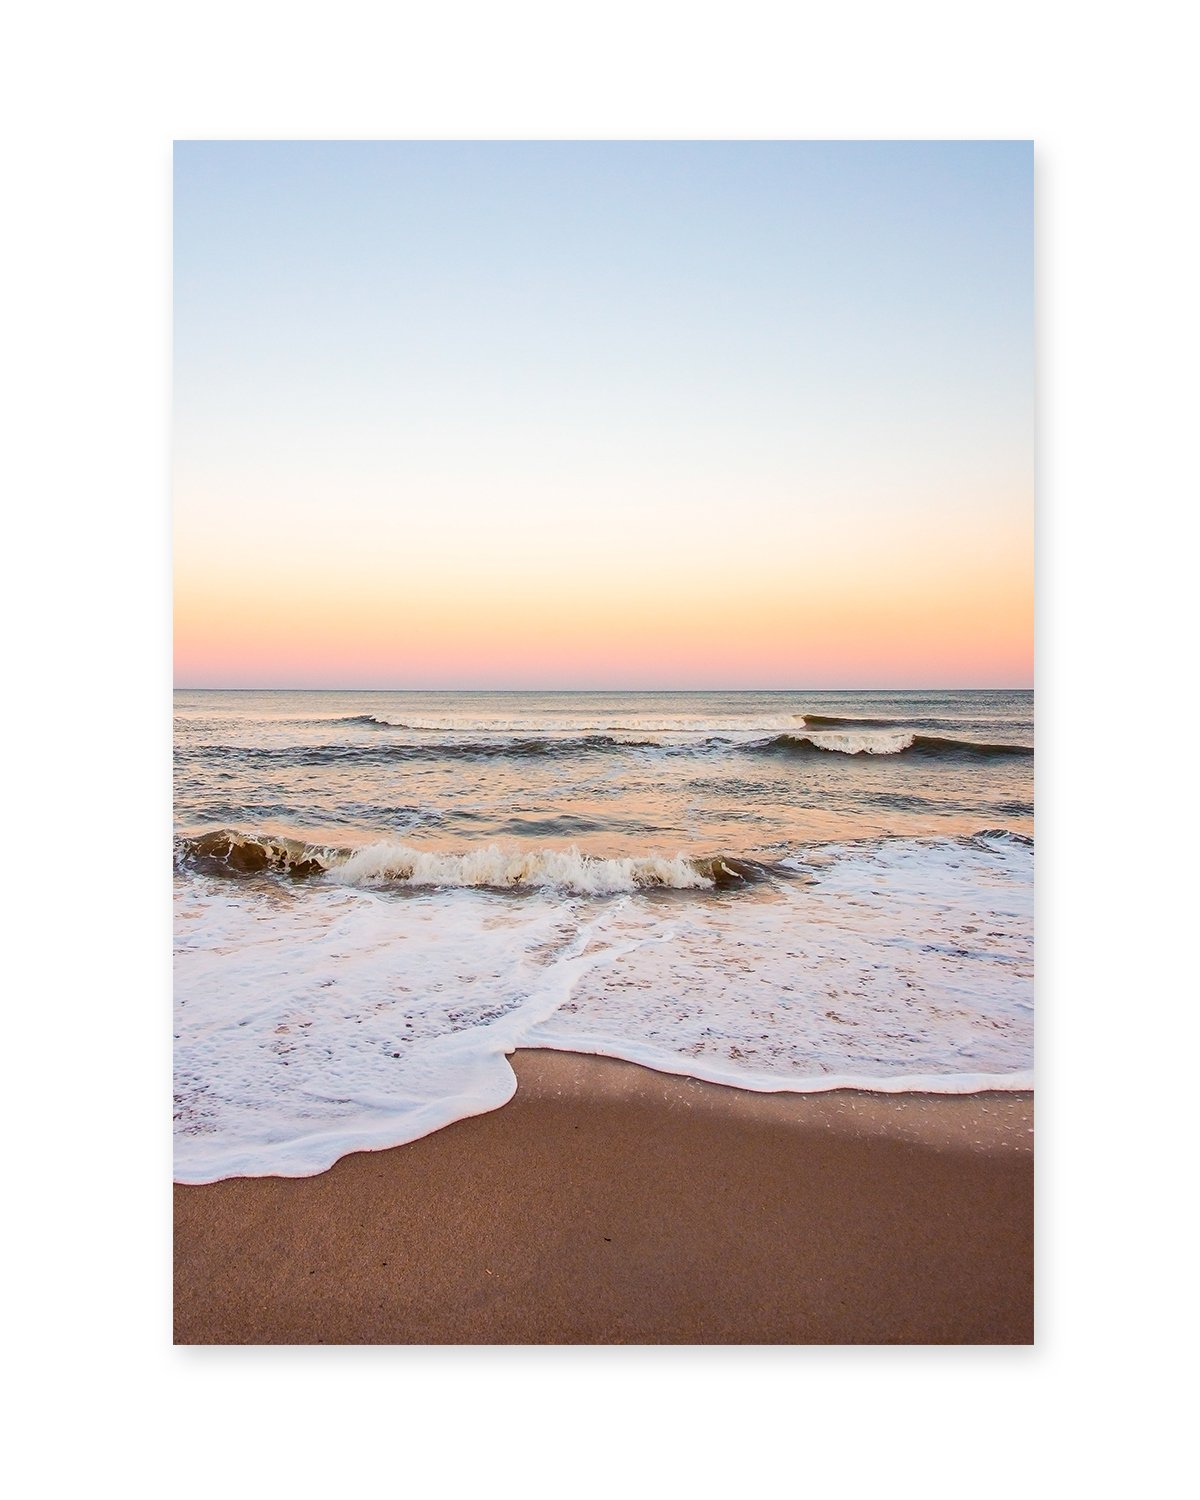 warm sunset carolina beach photograph, wright and roam